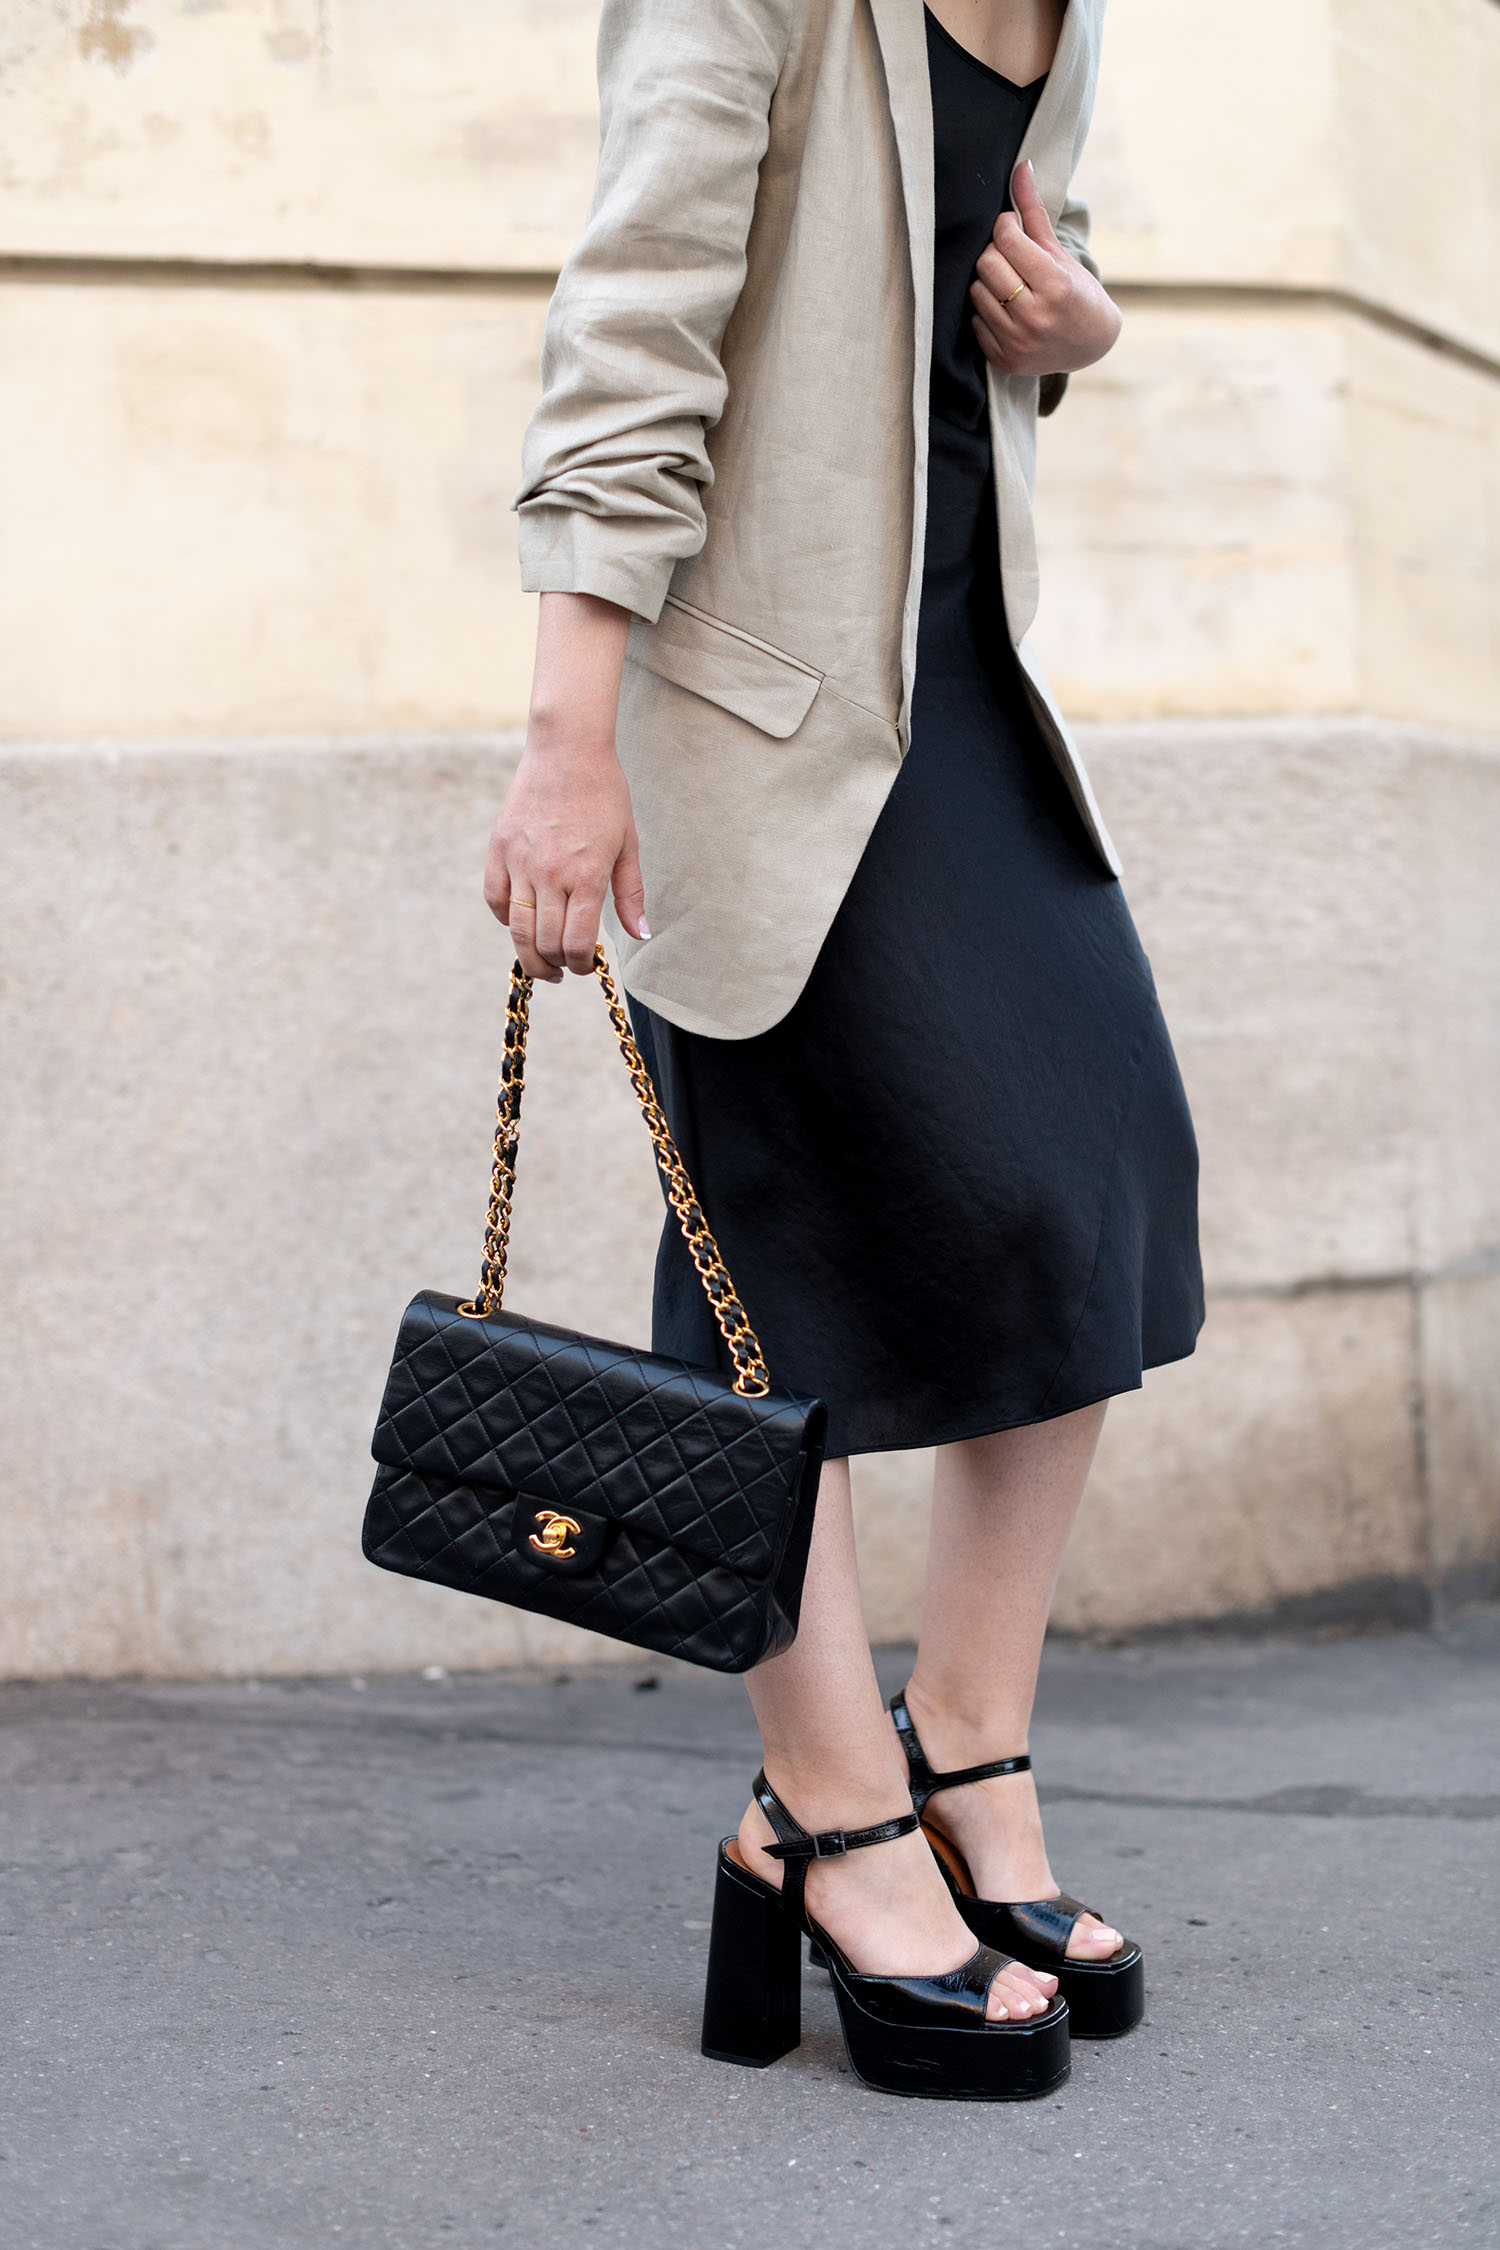 Coco & Voltaire - Chanel quilted handbag, Jonak platform sandals, Wilfred dress